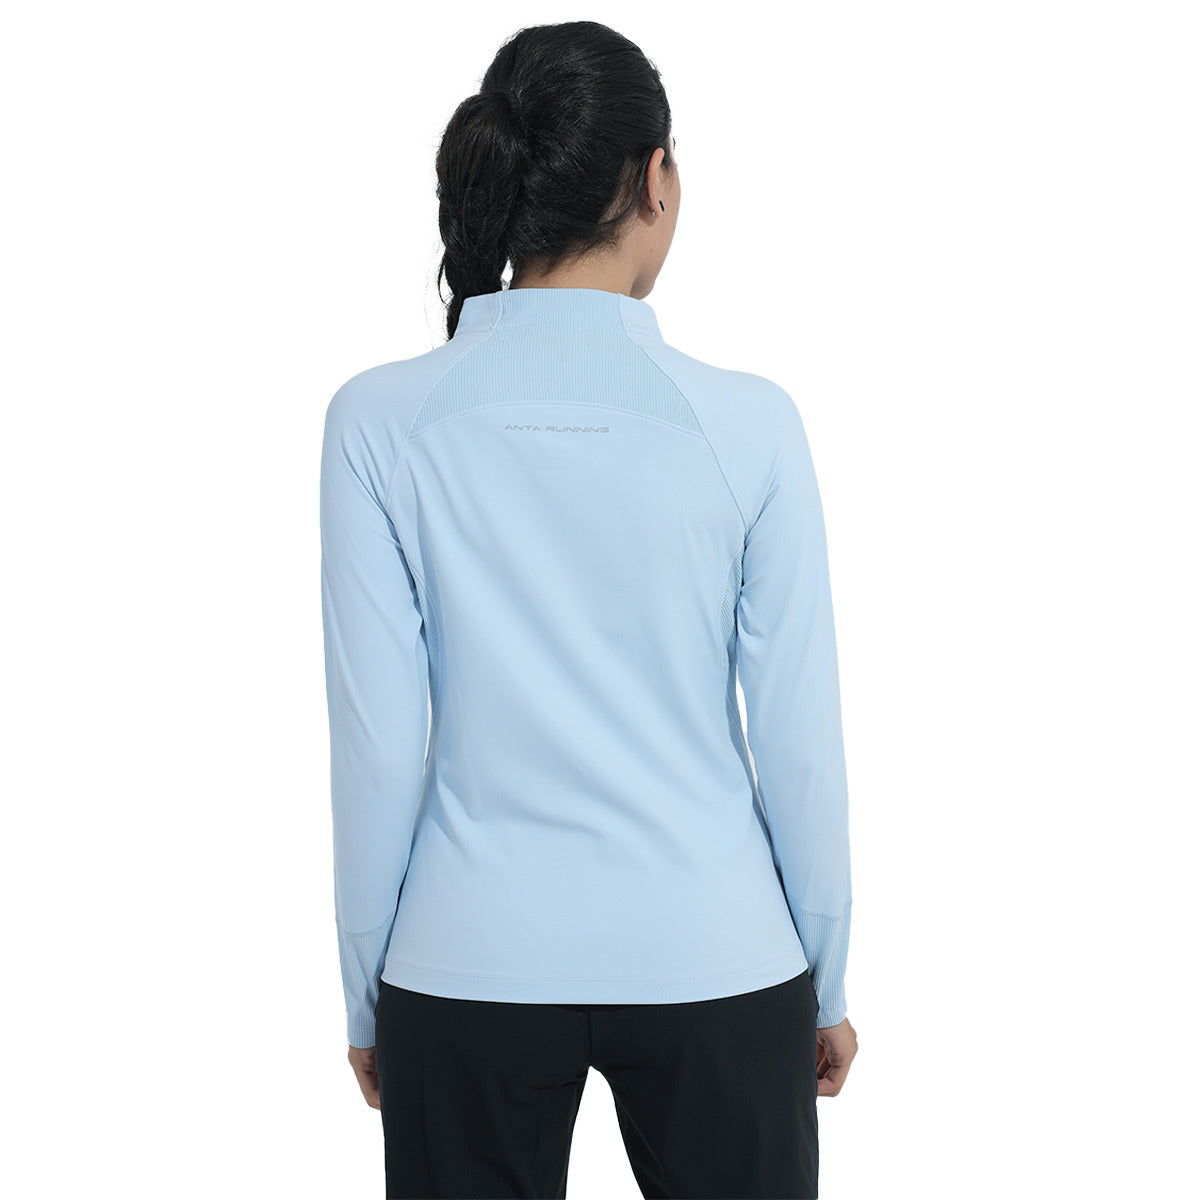 Anta T-Shirt with Long Sleeves & Half-Zipper For Women, Sky Blue